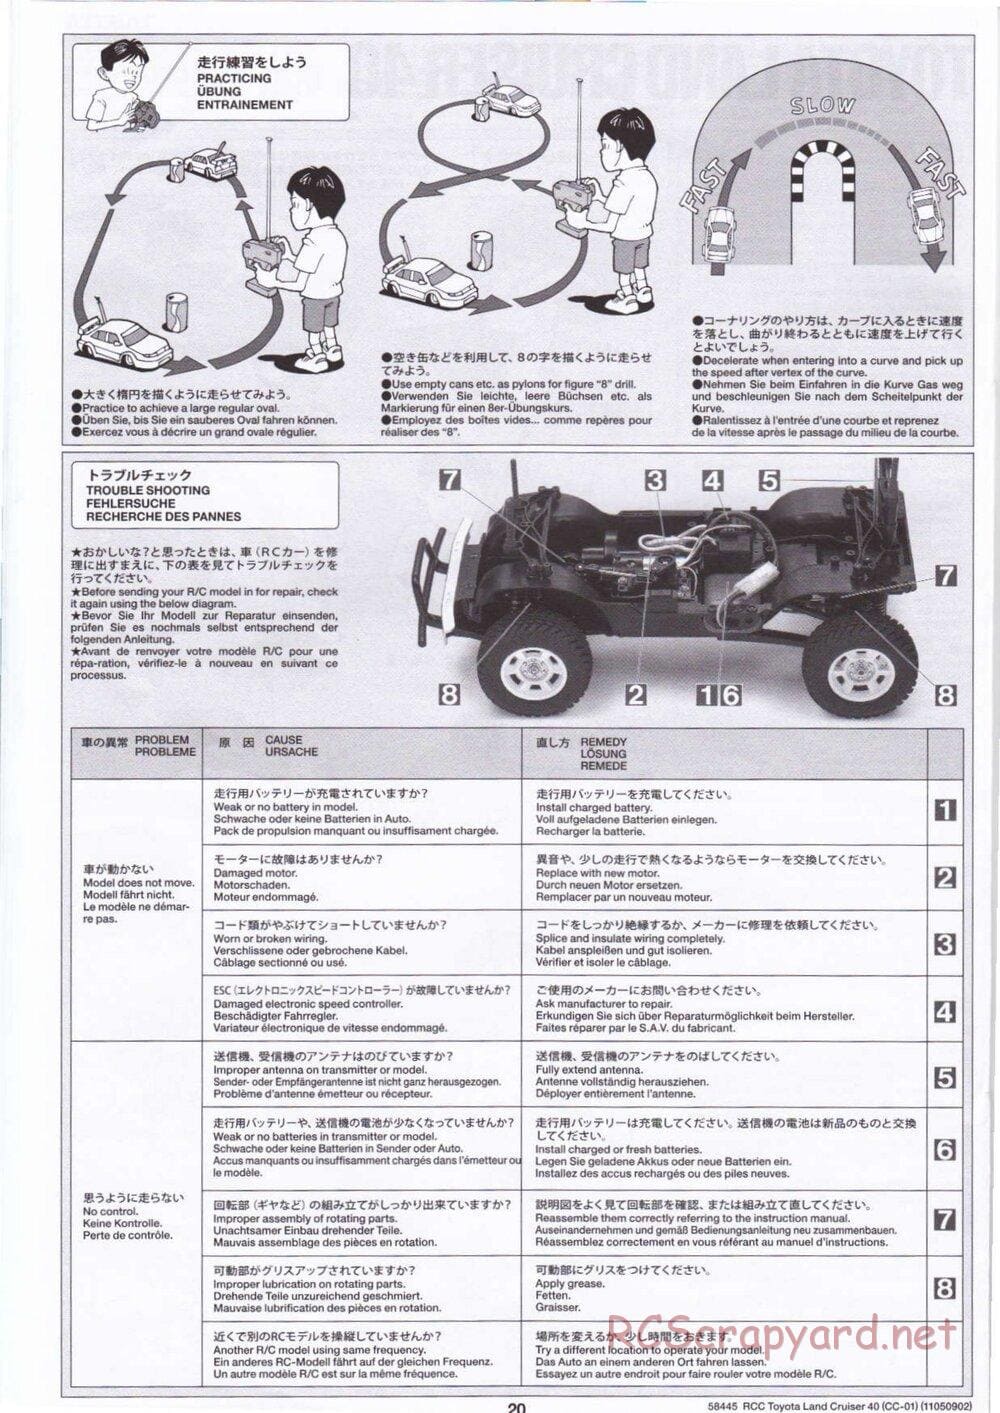 Tamiya - Toyota Land Cruiser 40 - CC-01 Chassis - Manual - Page 20